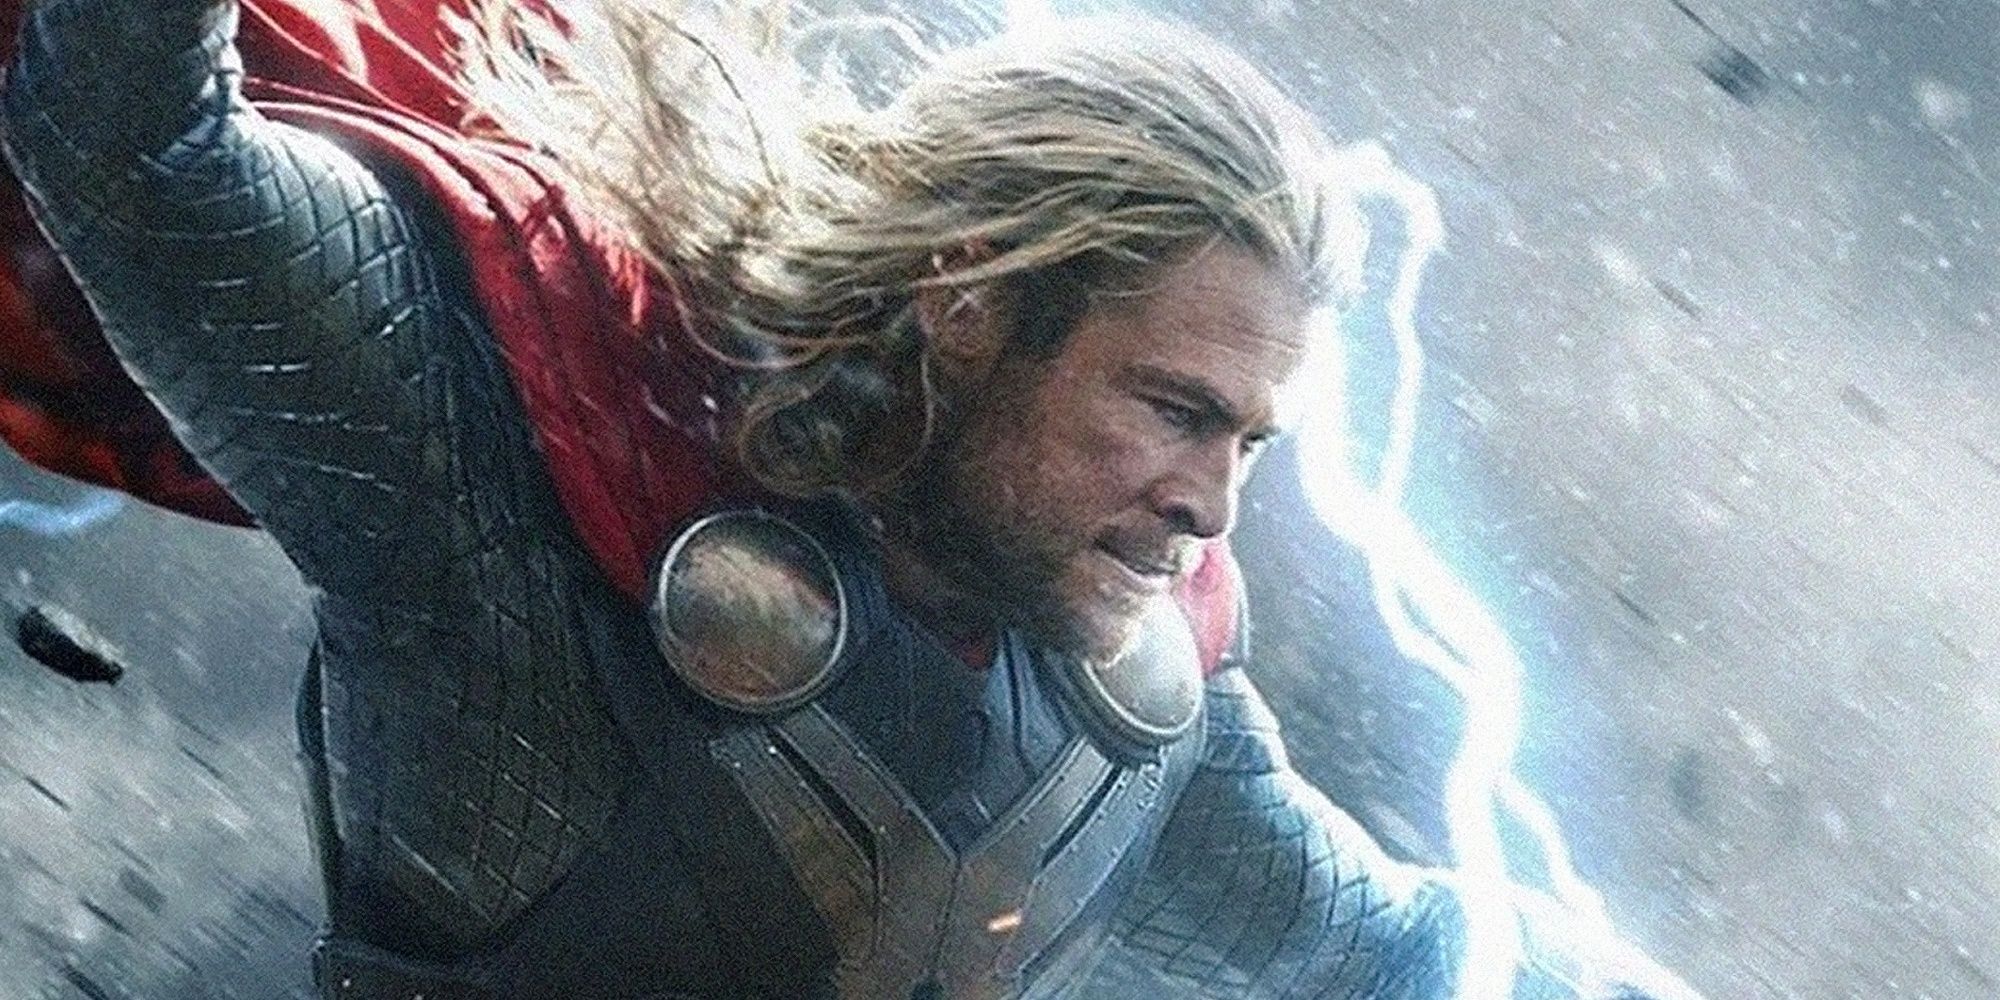 MCU Thor attacks with lightning.